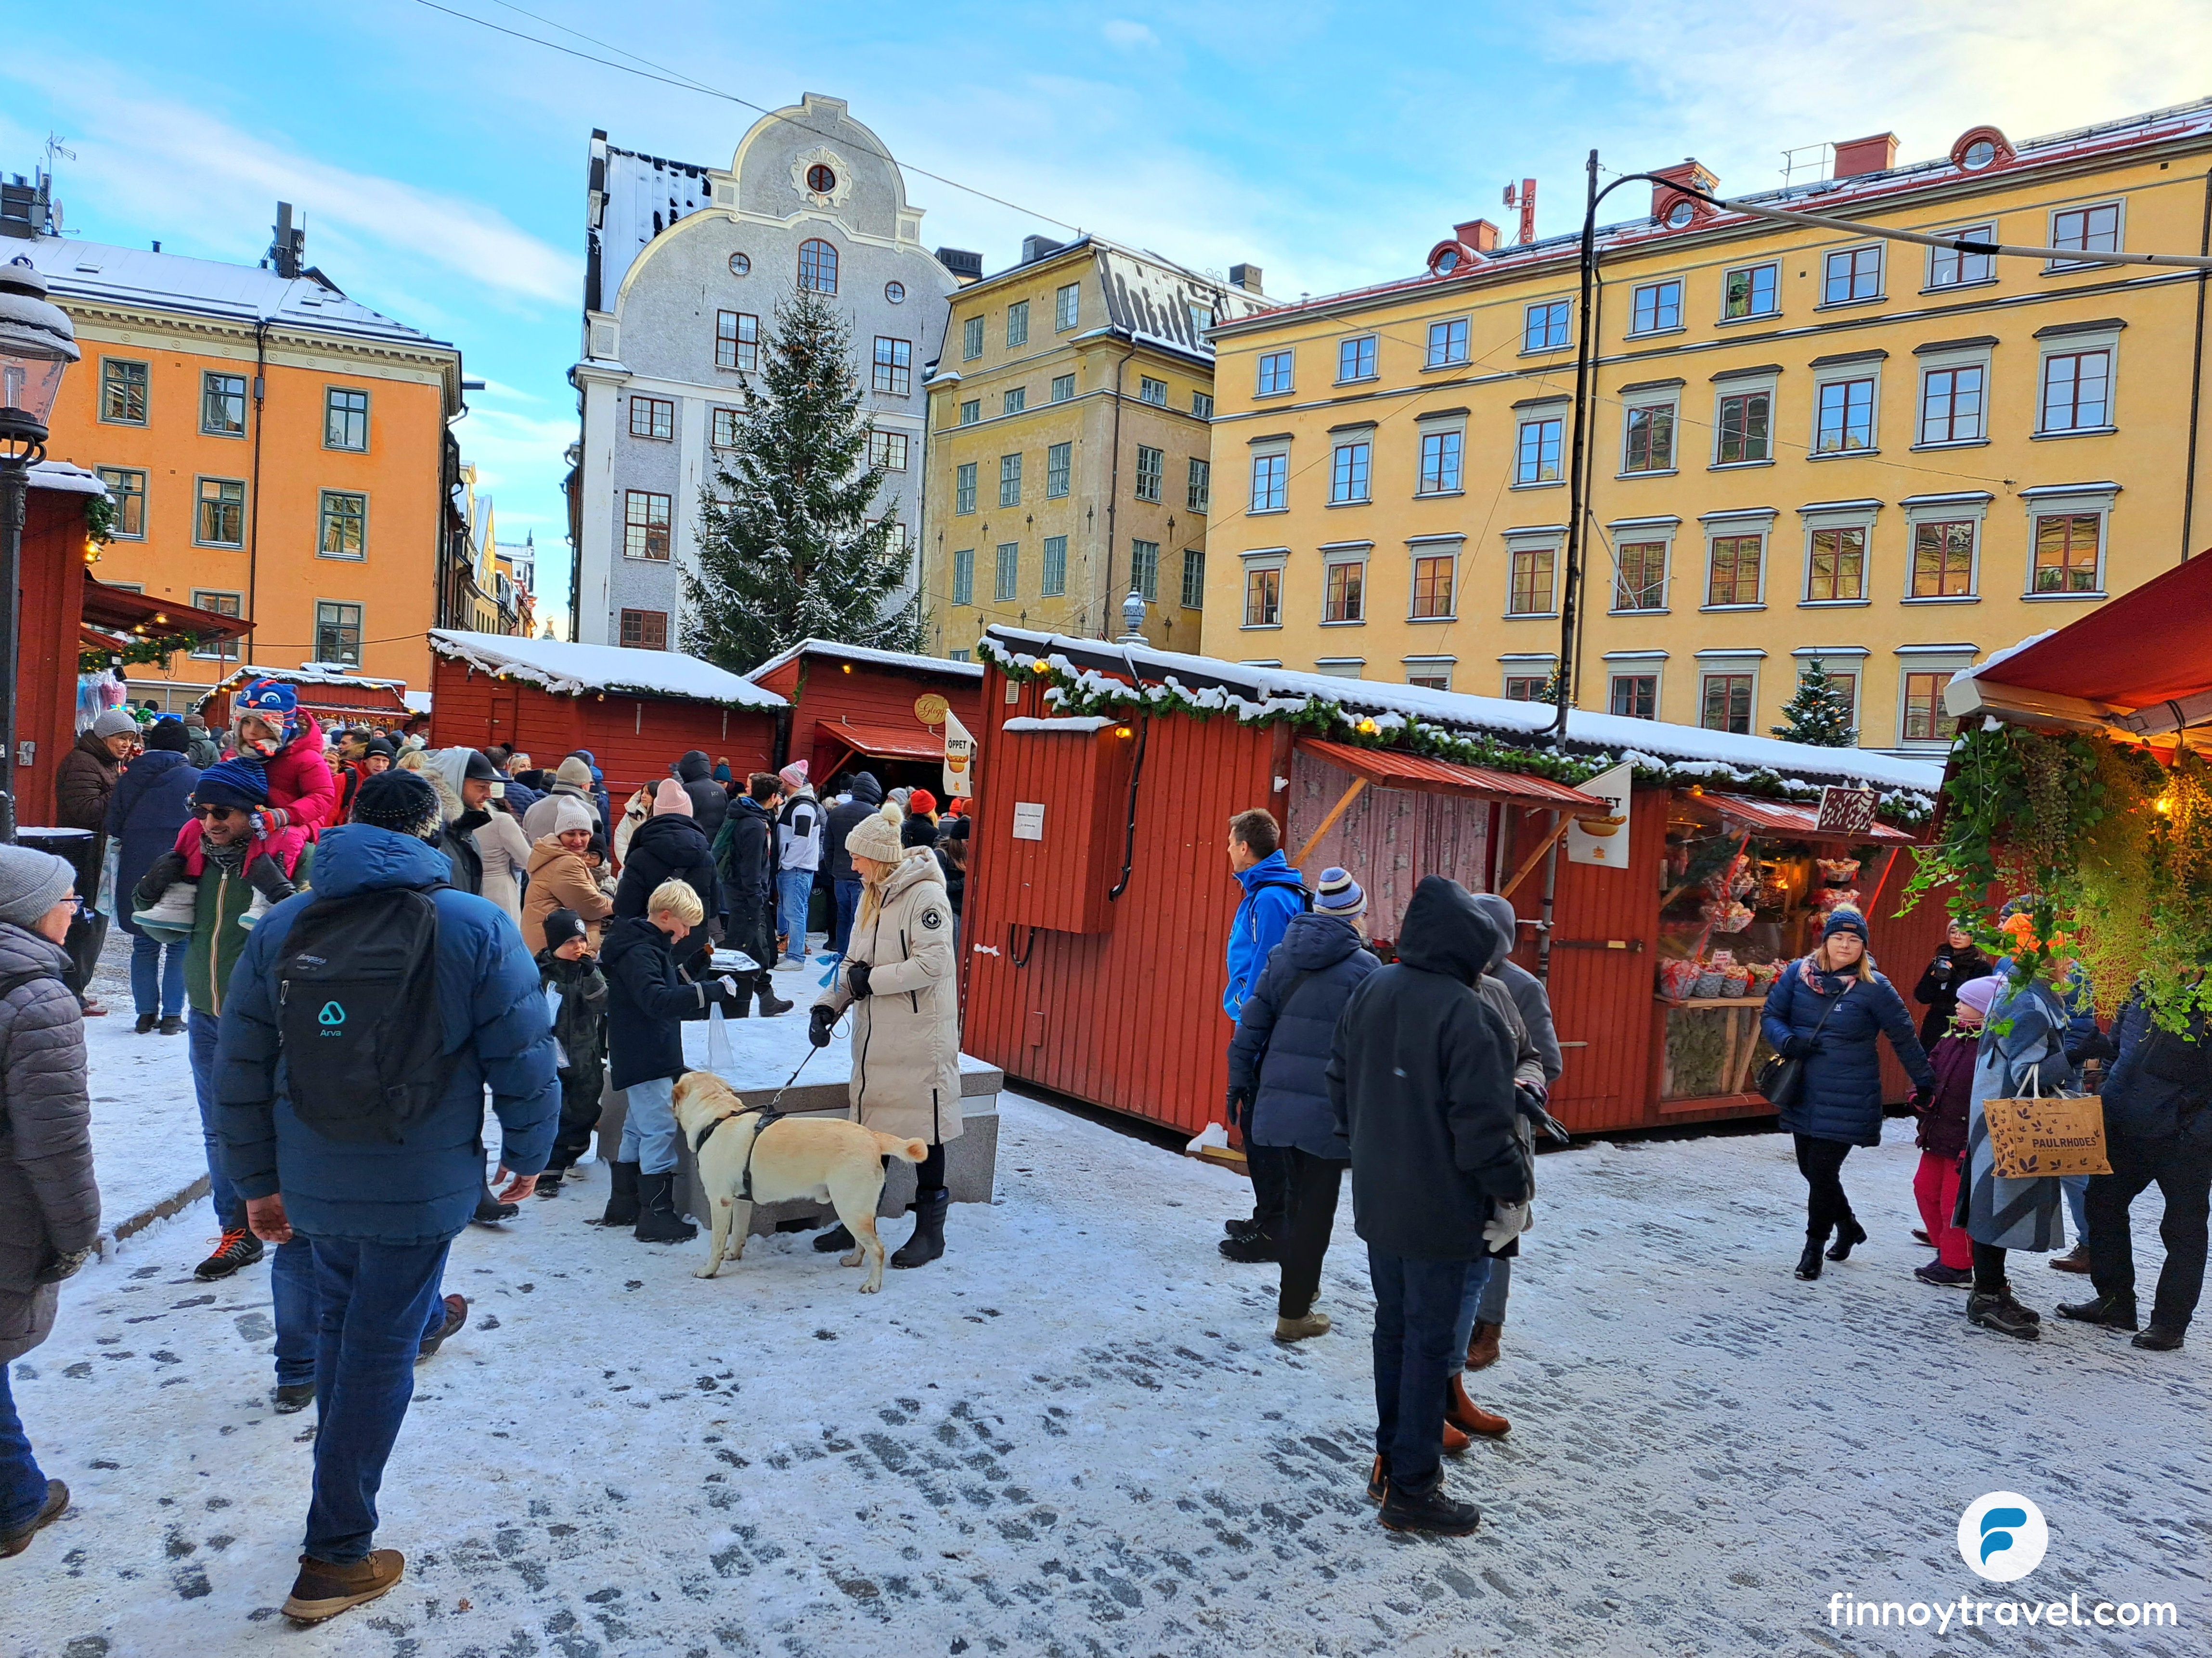 Stortorget_Christmas_Market_snow_and_stalls_Stockholm.jpg